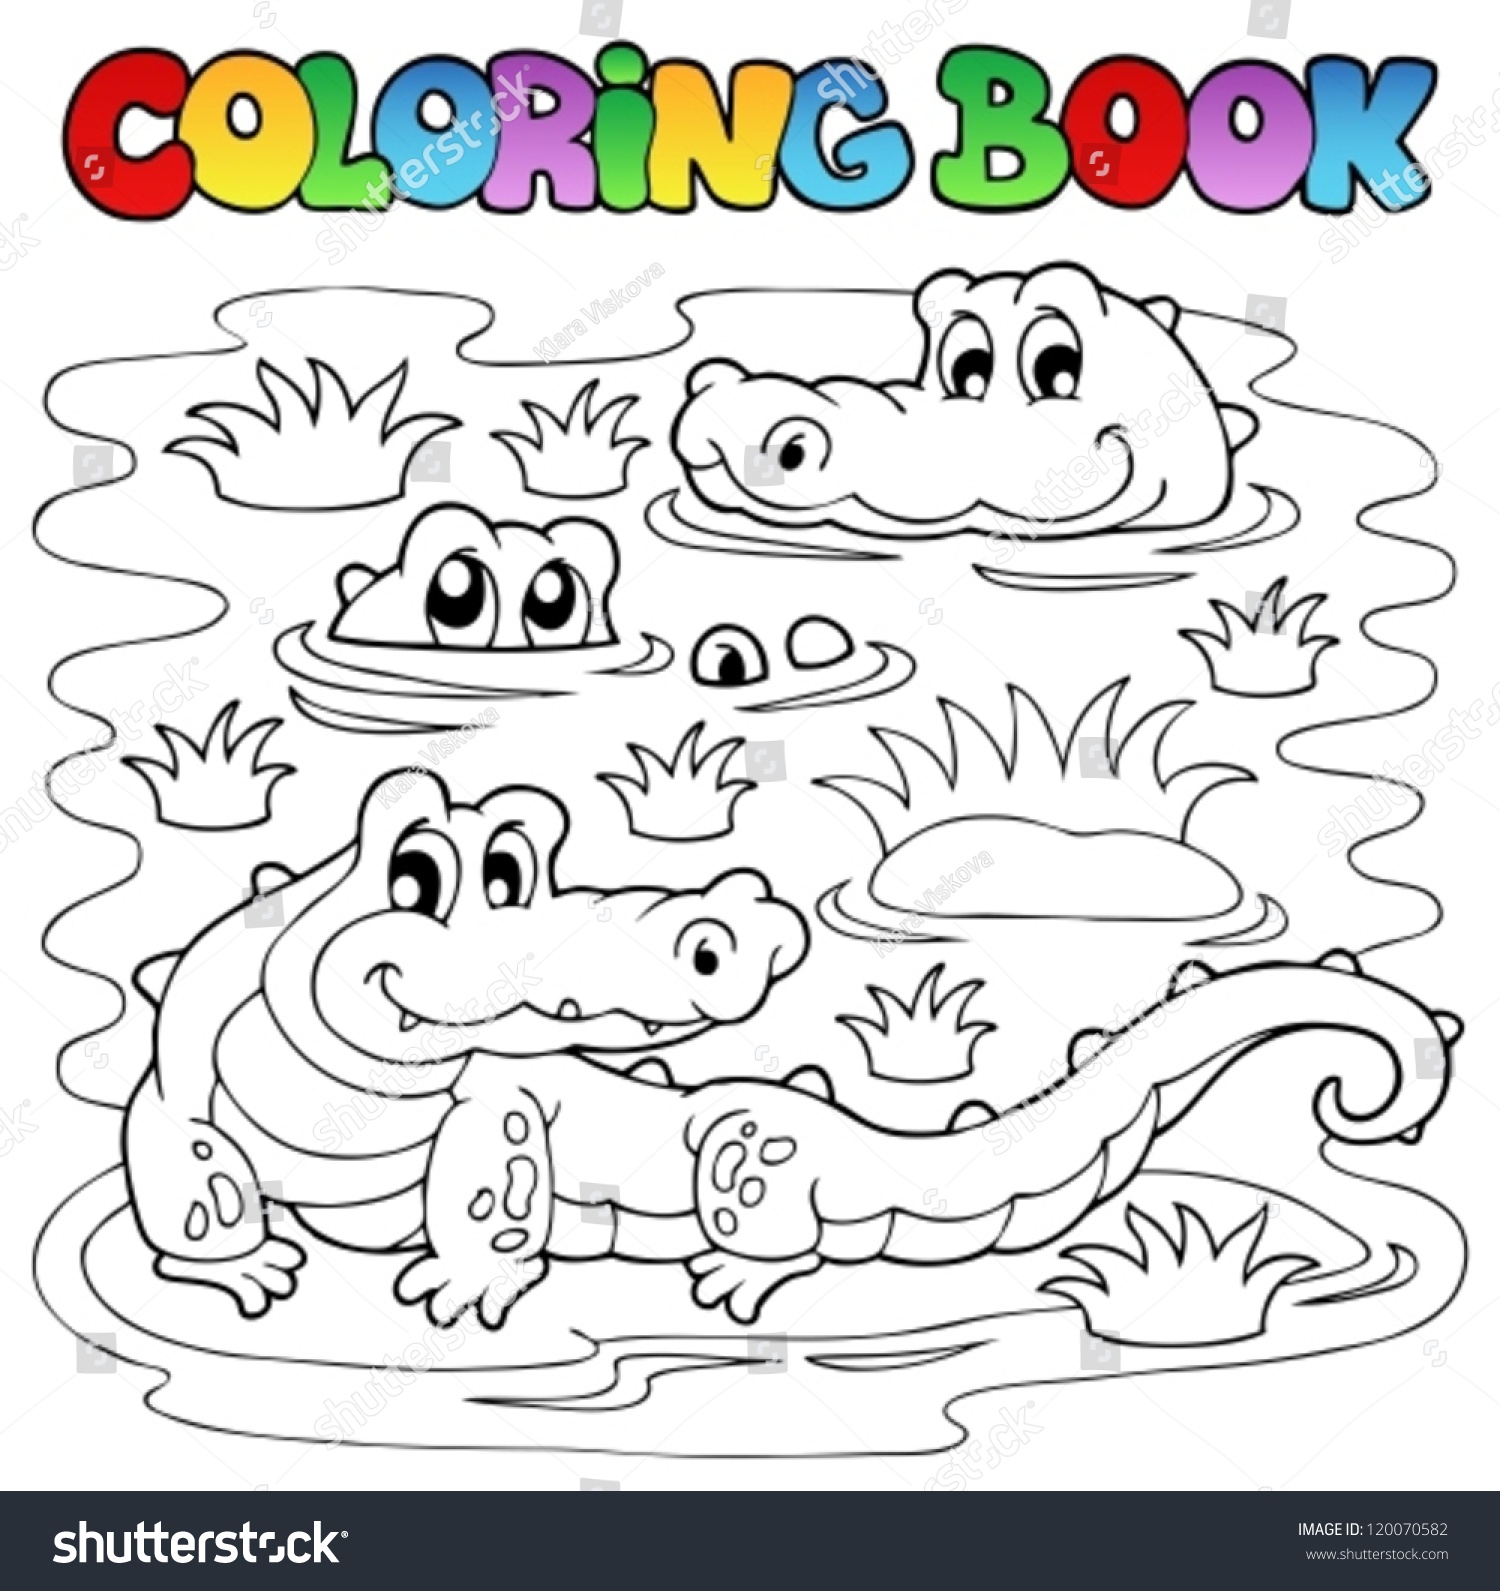 Coloring Book Crocodile Image 1 - Vector Illustration. - 120070582 ...